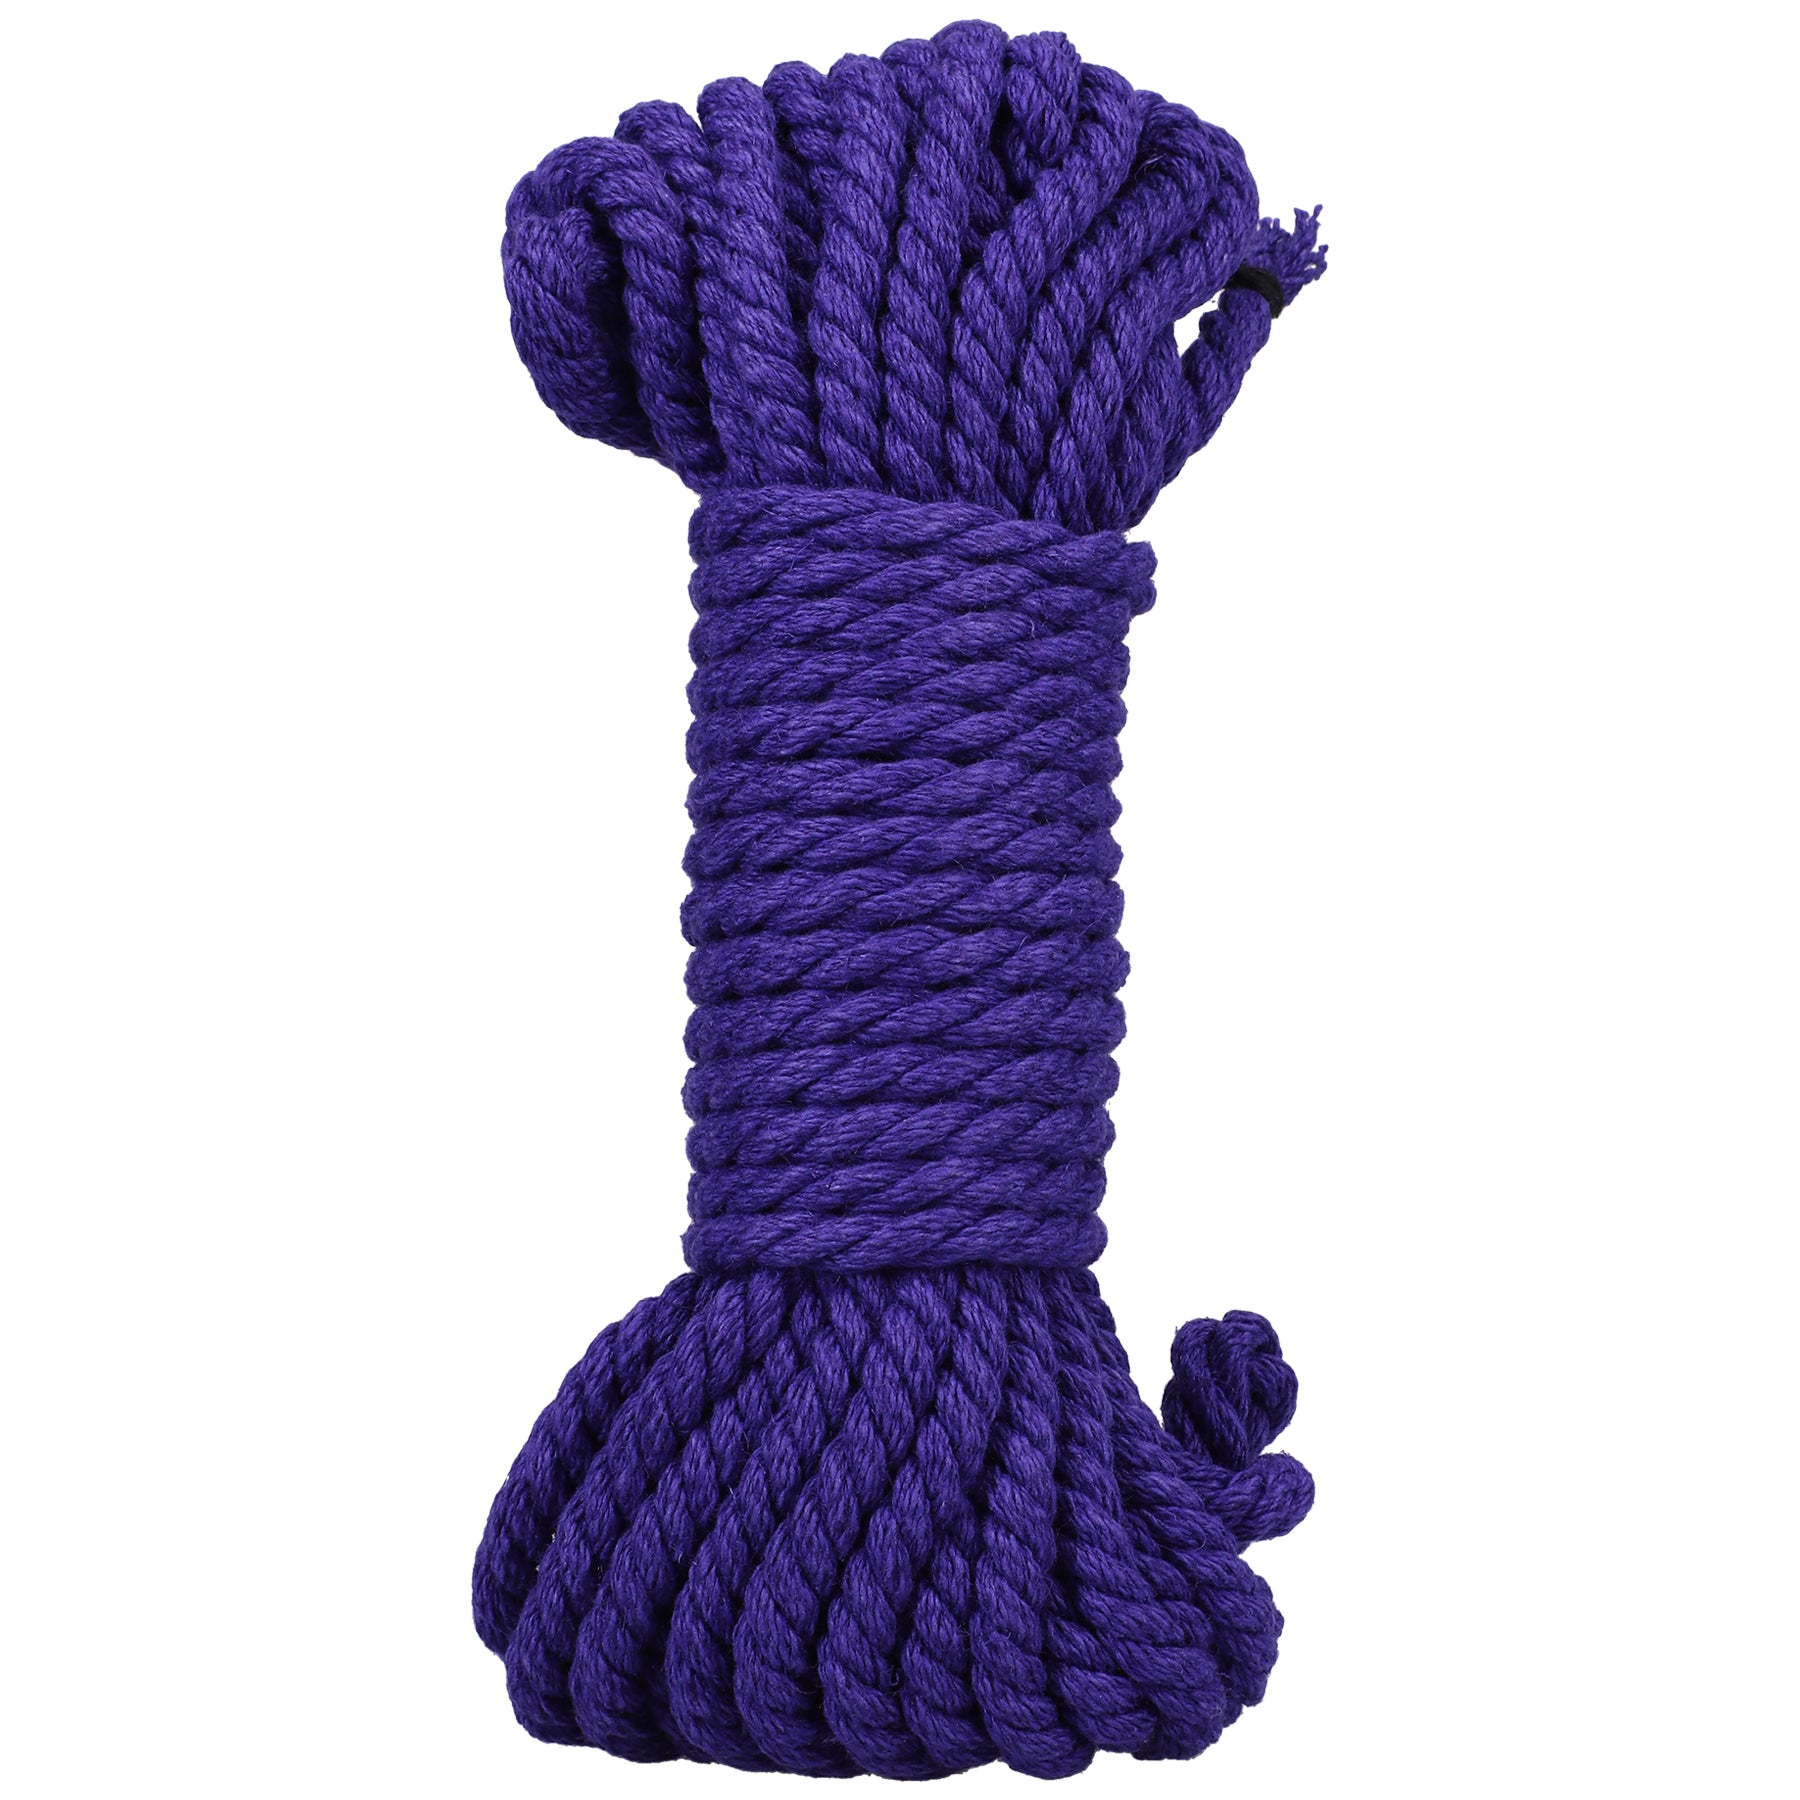 Merci - Bind and Tie - 6mm Hemp Bondage Rope - 30  Feet - Violet-2